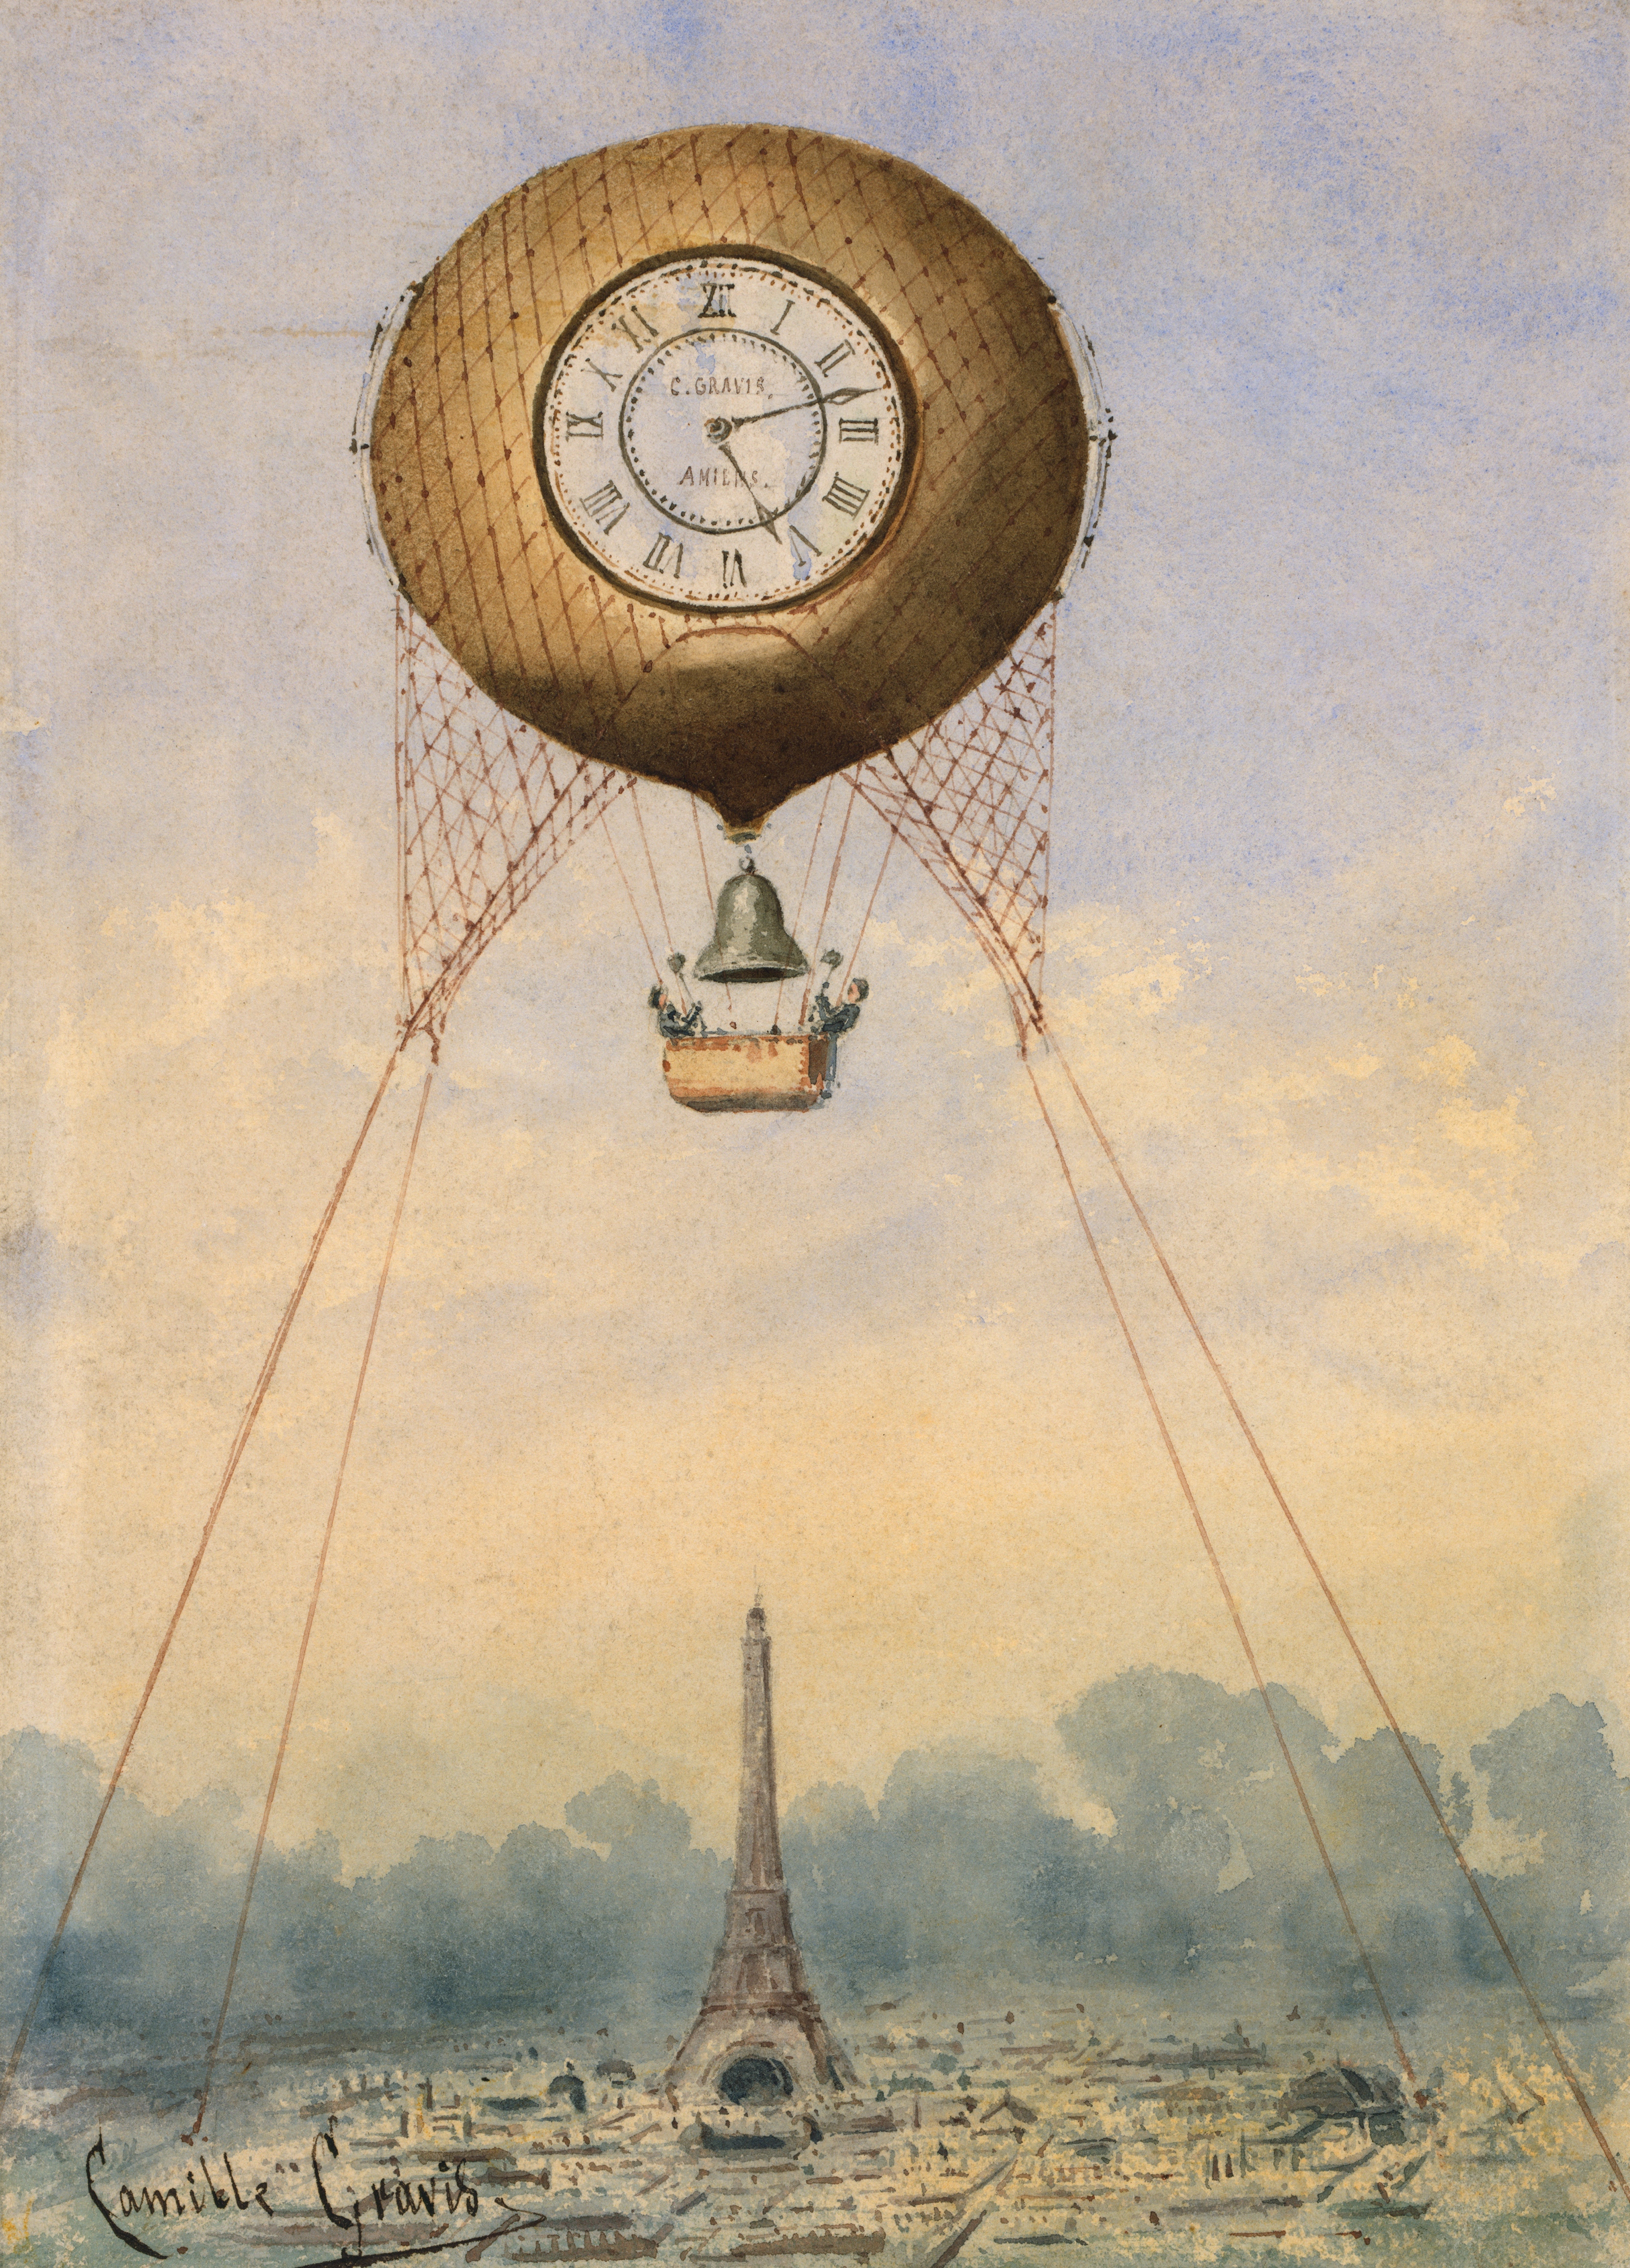 Captive balloon with clock face and bell, Camille Gravis, circa 1889